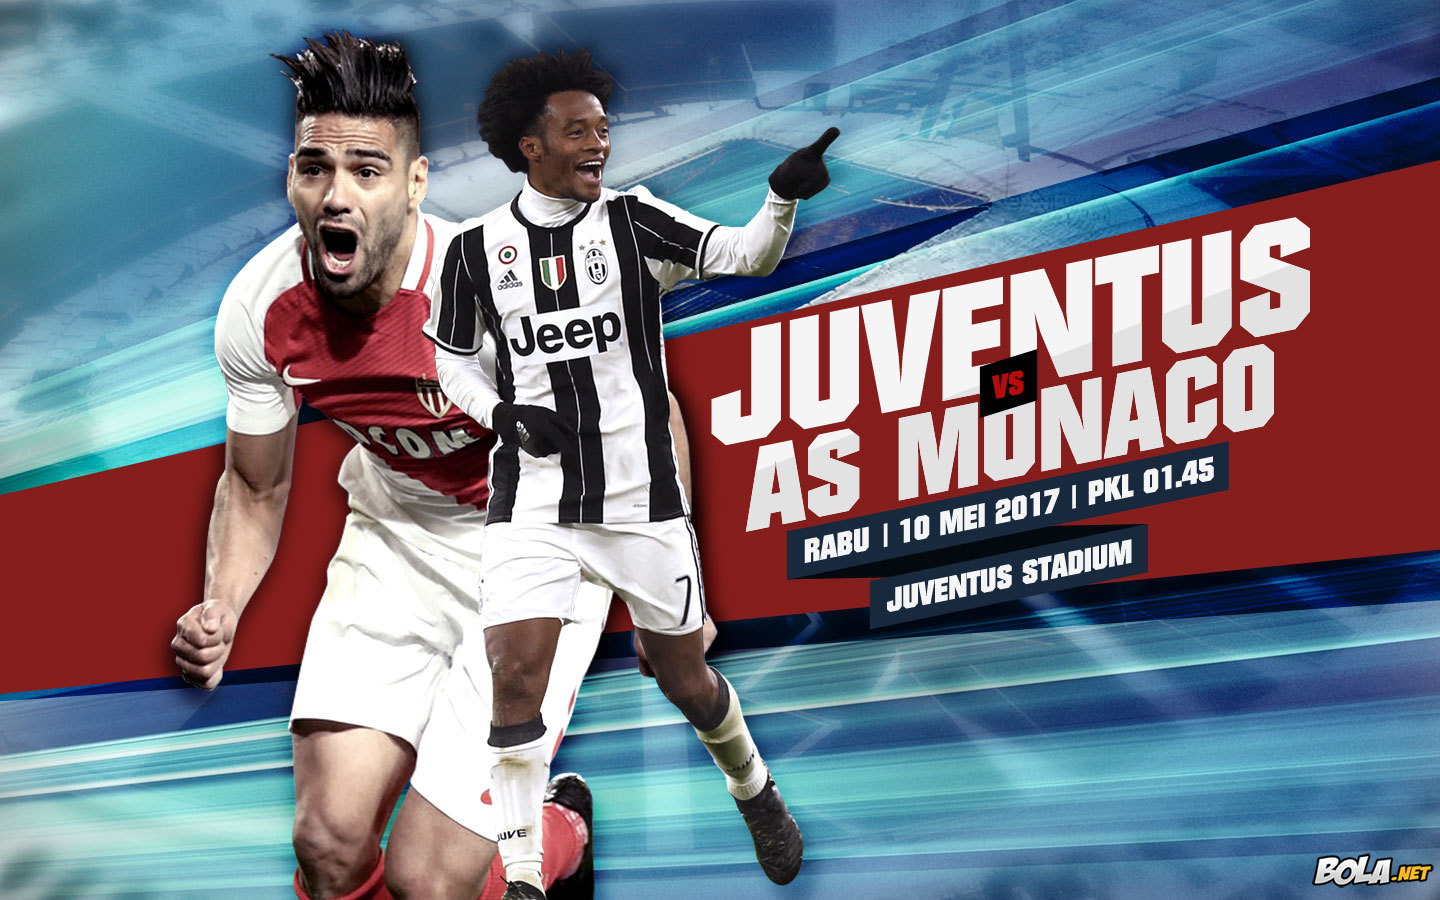 Deskripsi : Wallpaper Juventus Vs As Monaco, size: 1440x900